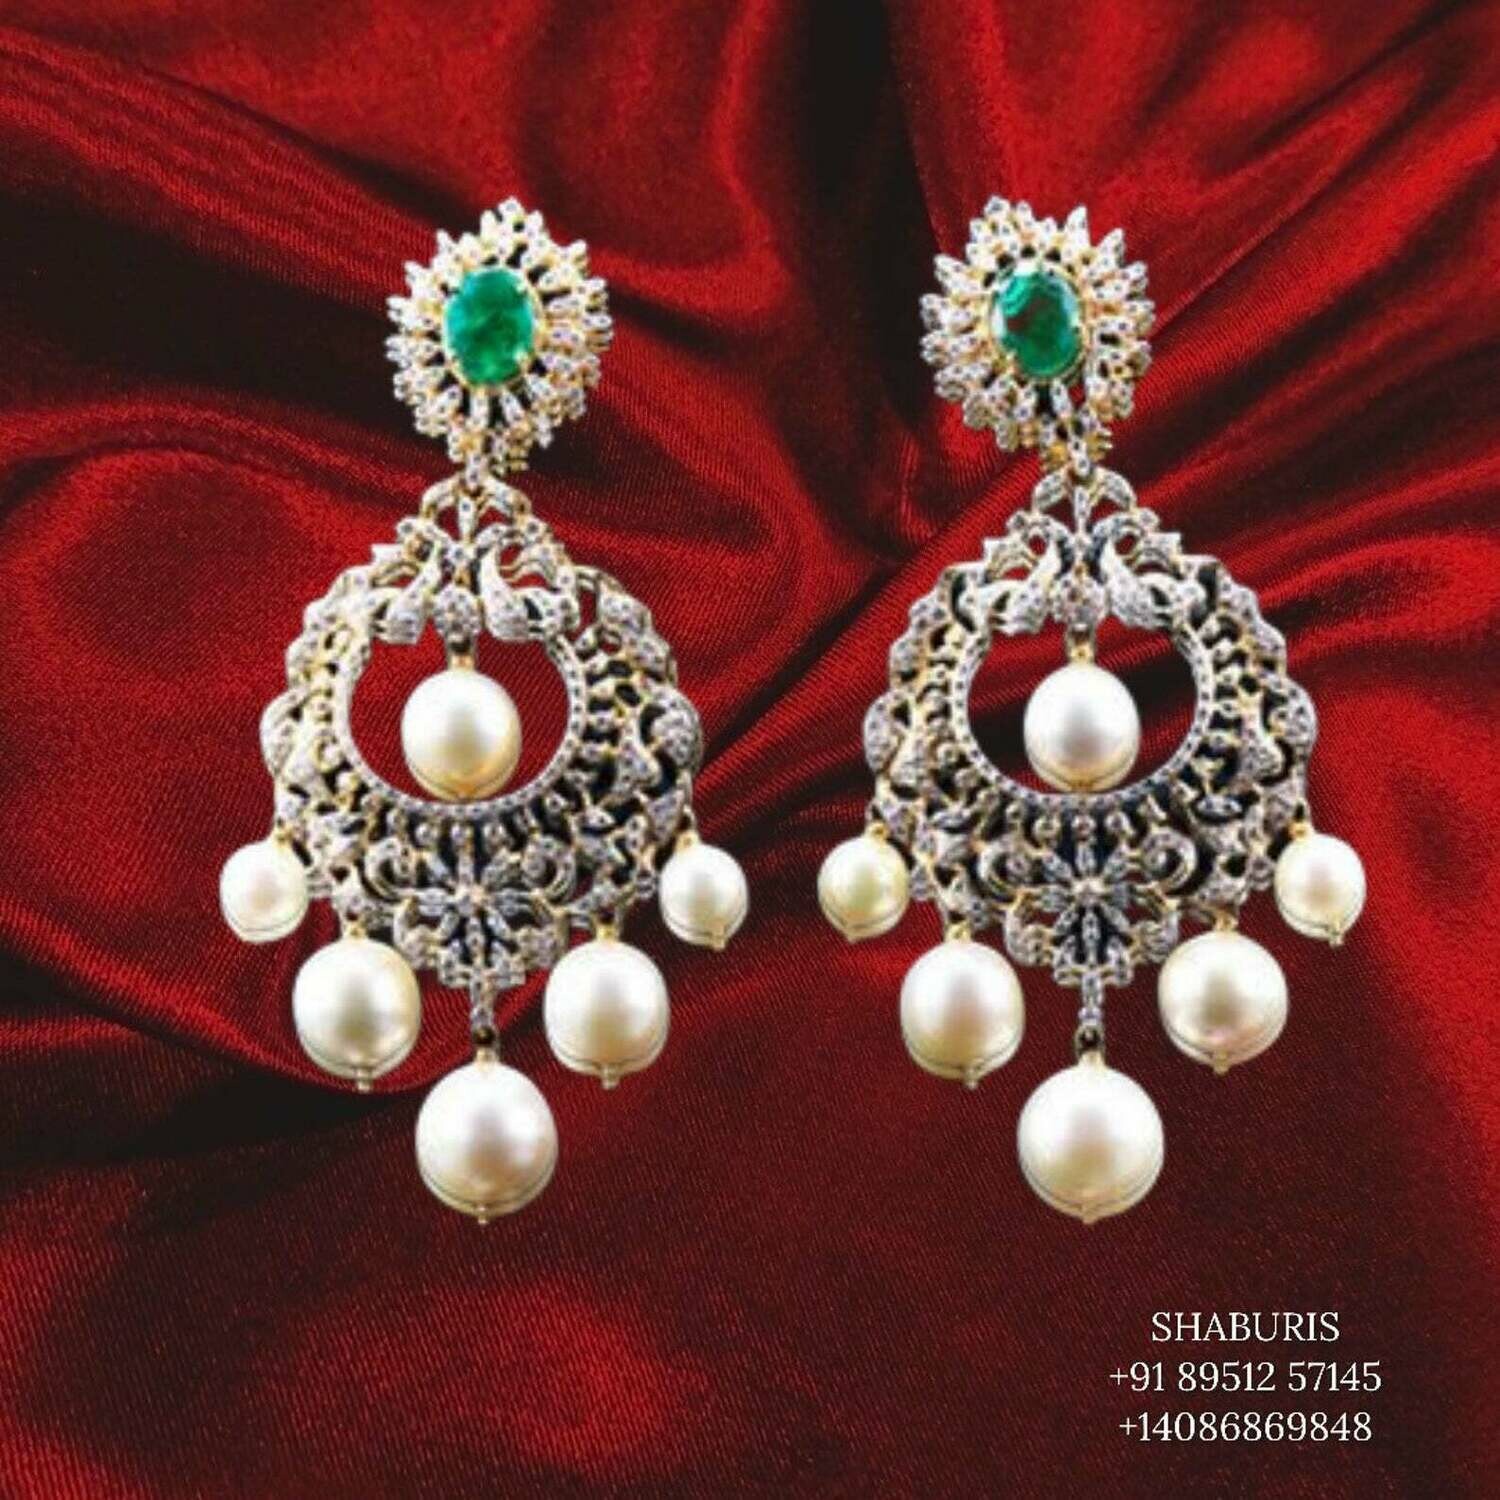 Diamond Jhumka ,diamond earrings,Pure silver Jhumkas Indian,Indian Earrings,Indian Wedding Jewelry -NIHIRA-SHABURIS